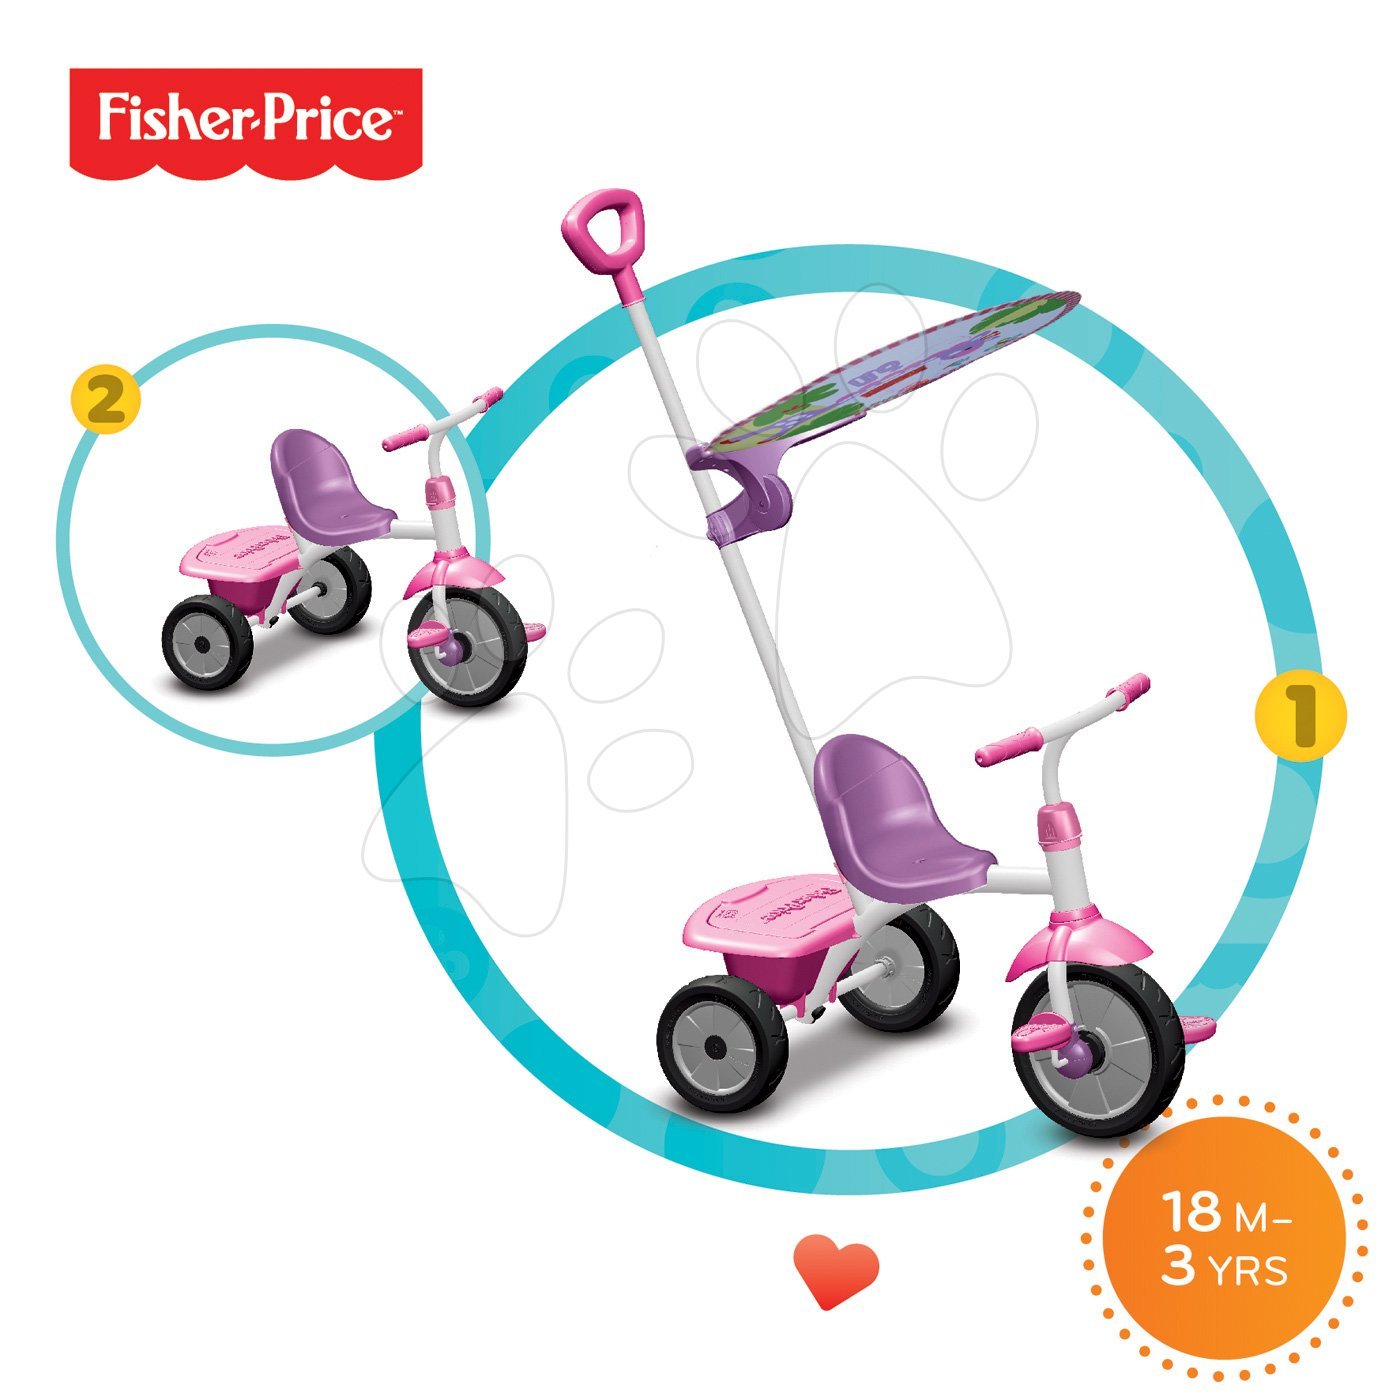 Triciklik 15 hónapos kortól - Tricikli Fisher-Price Glee Plus smarTrike rózsaszín-lila 18 hó-tól